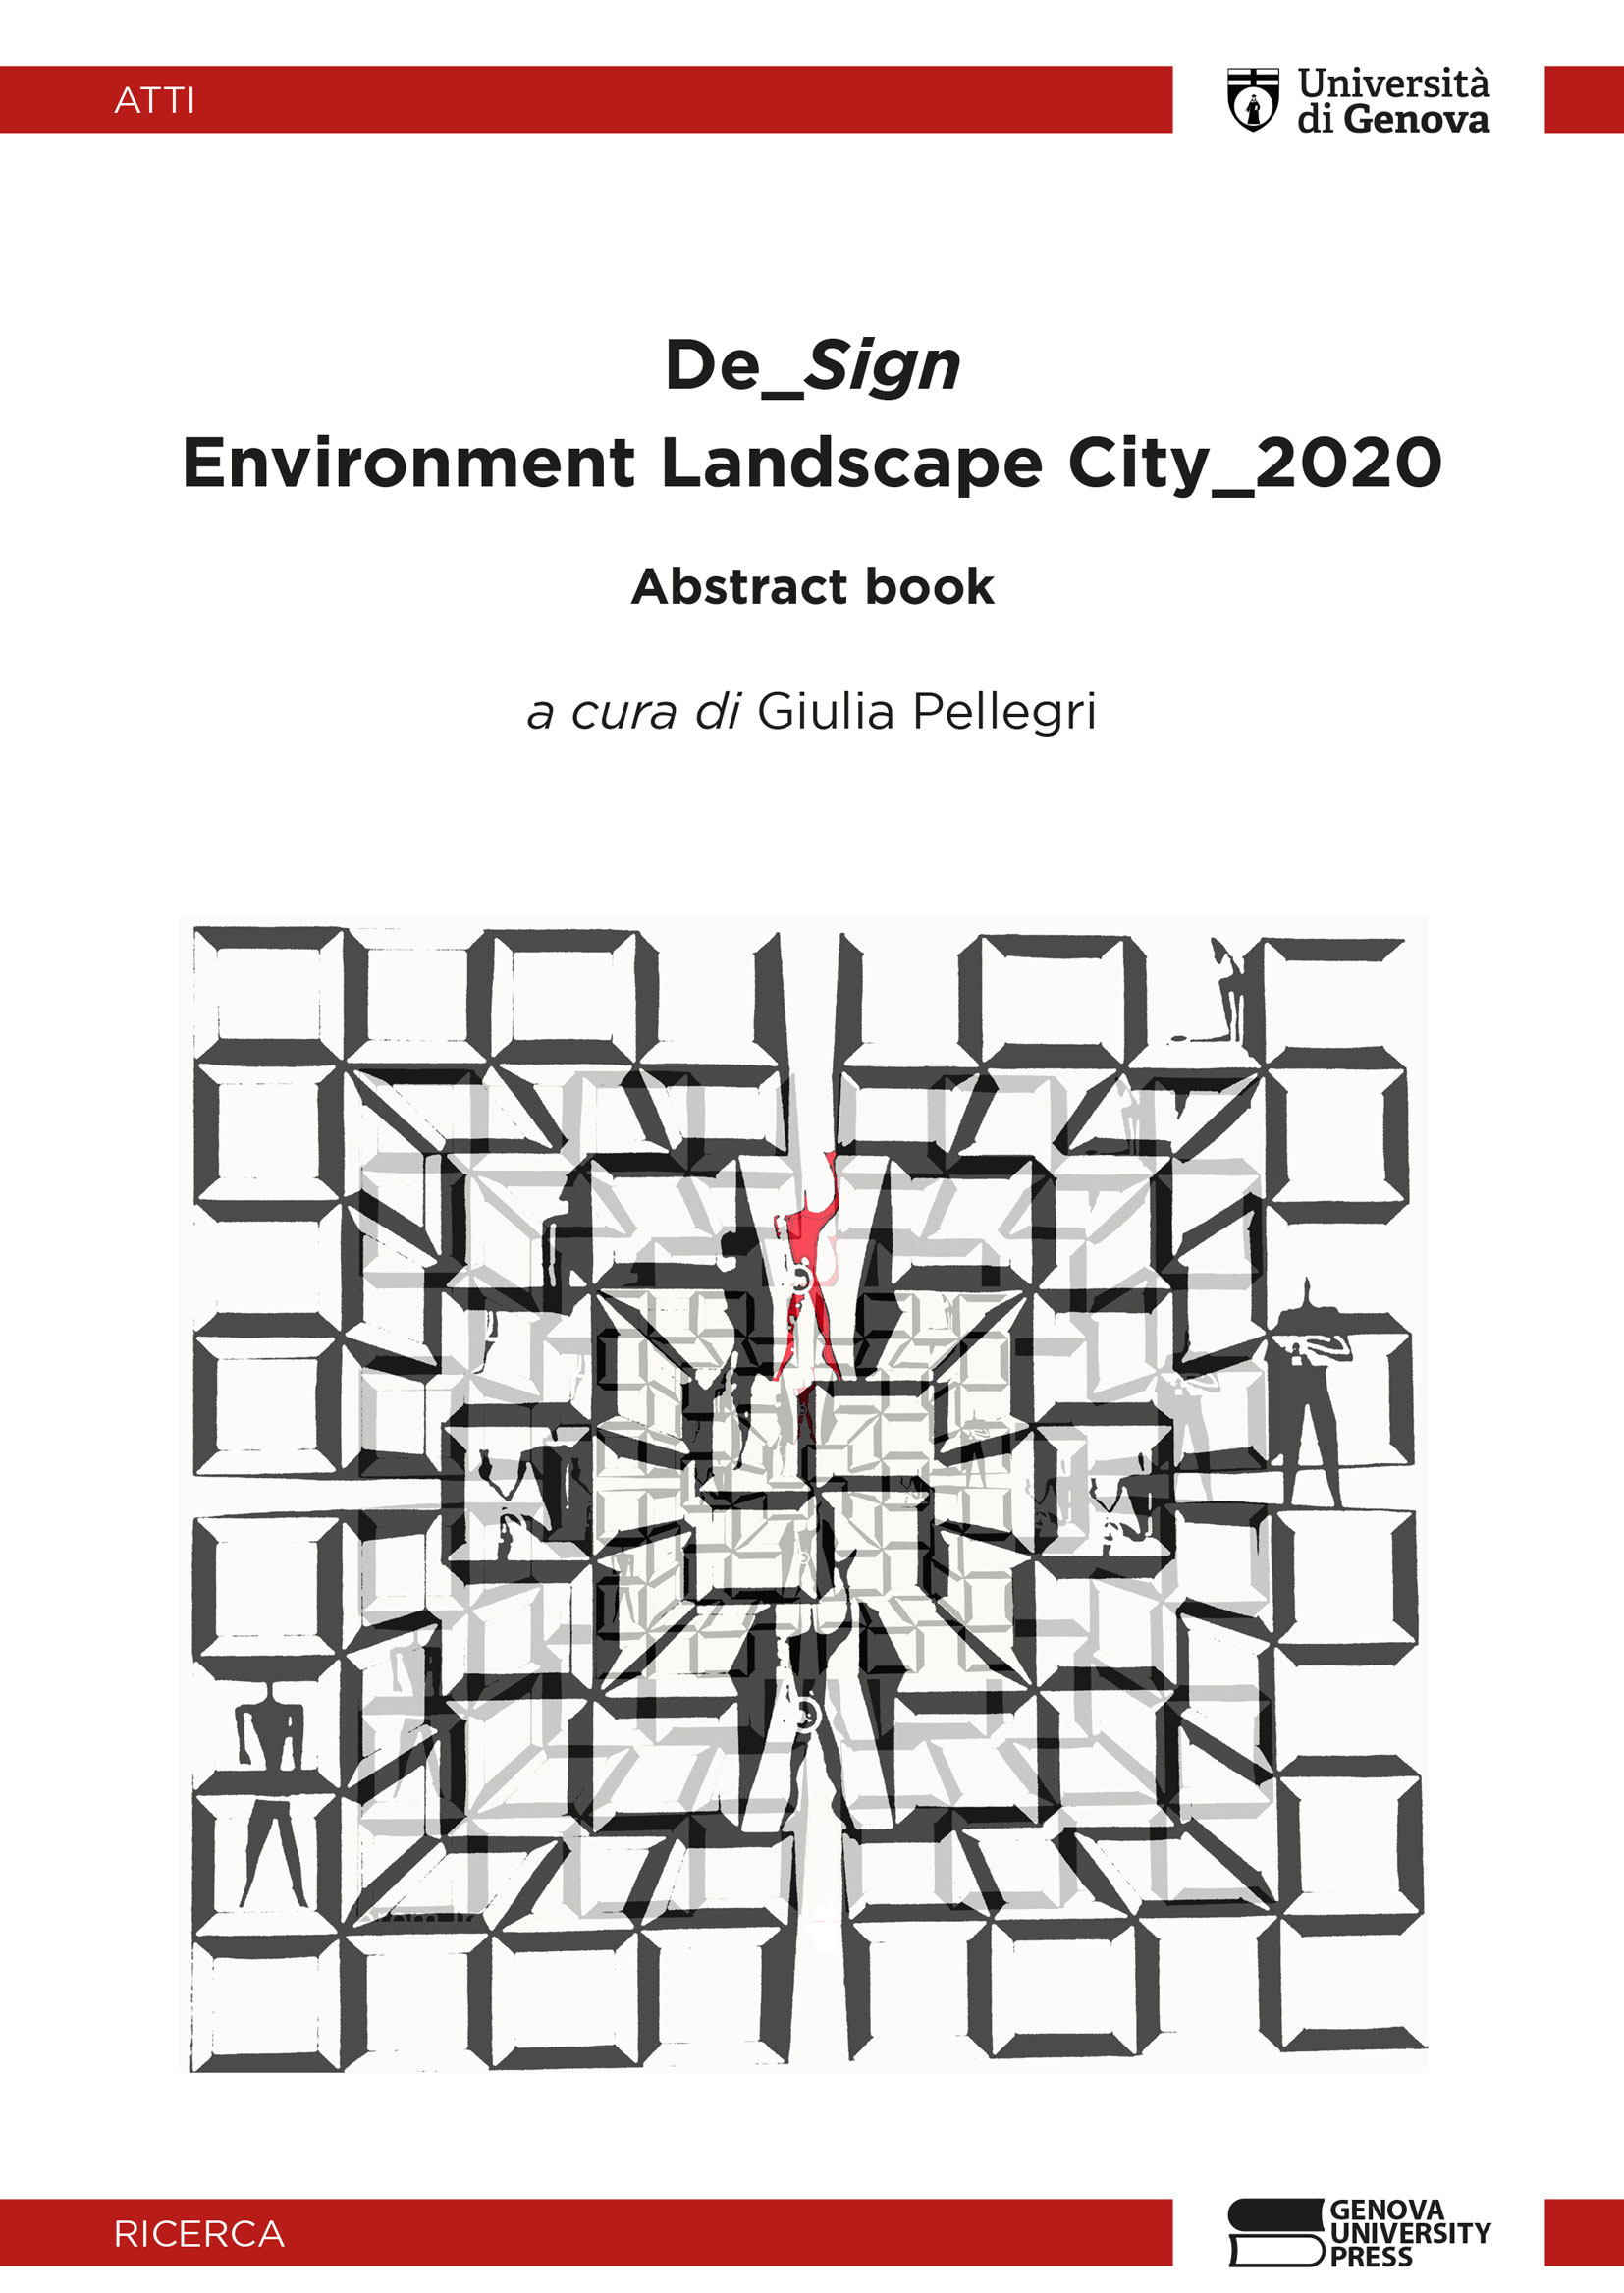 De_Sign. Environment Landscape City_2020 - Abstract book